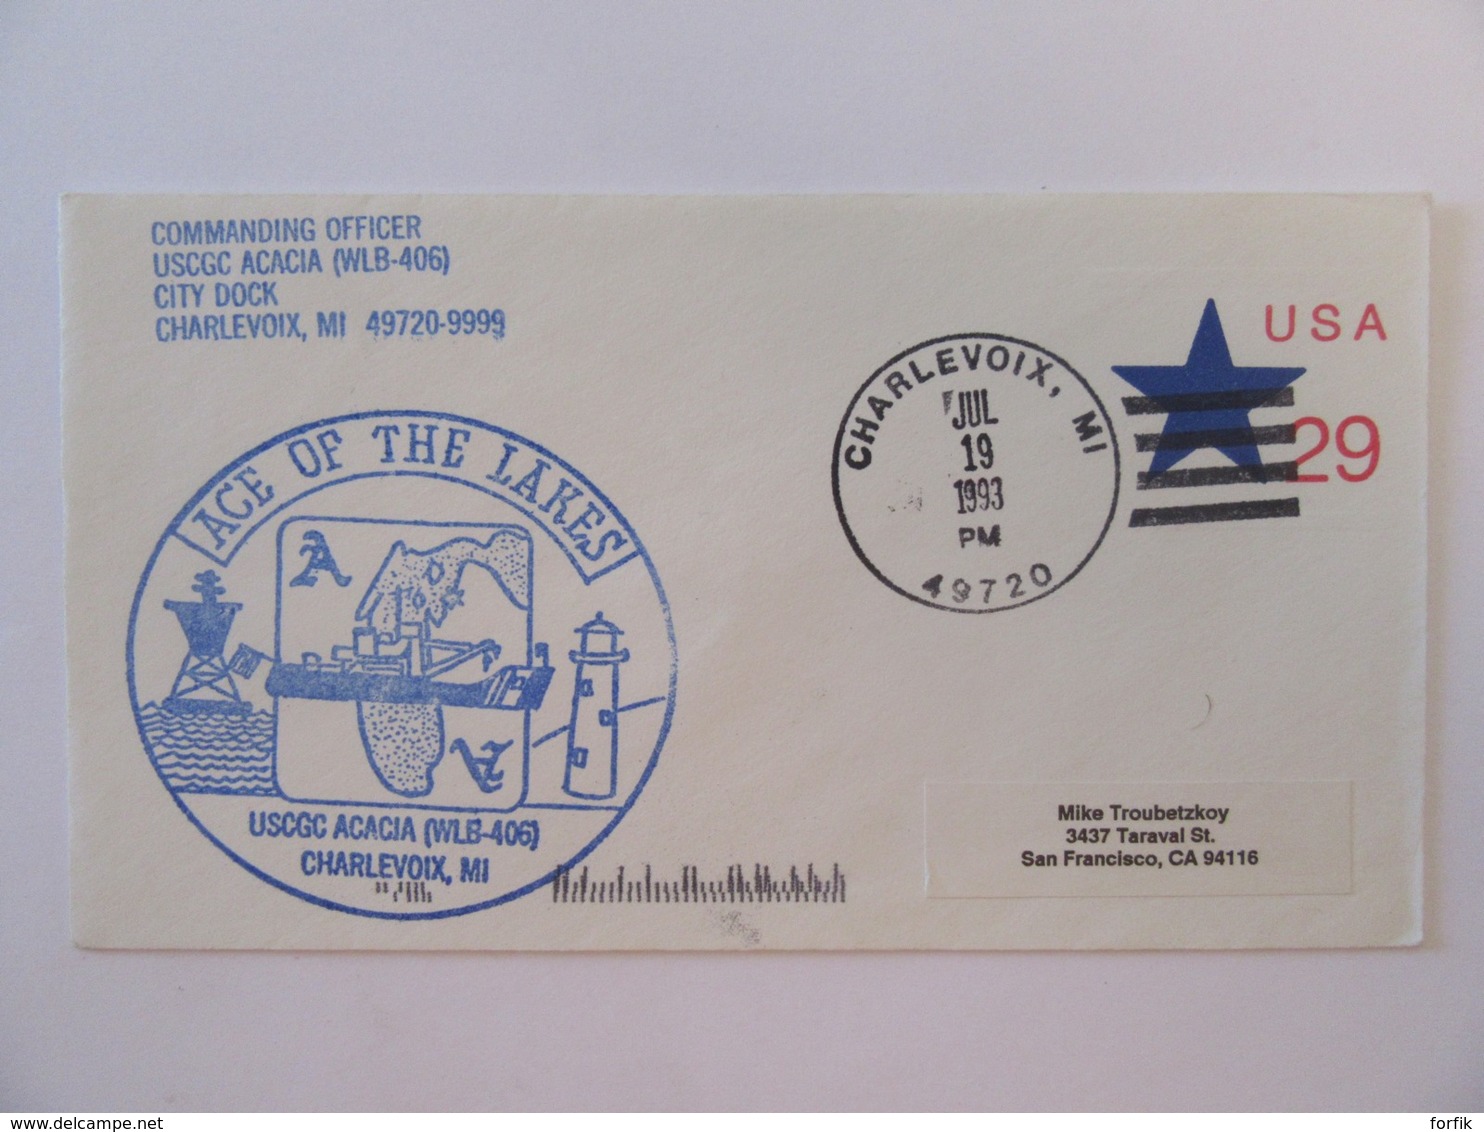 Etats-Unis / USA - Entier Postal (enveloppe) USPS 1991 - Charlevoix Vers San Francisco - Age Of The Lakes - 1981-00